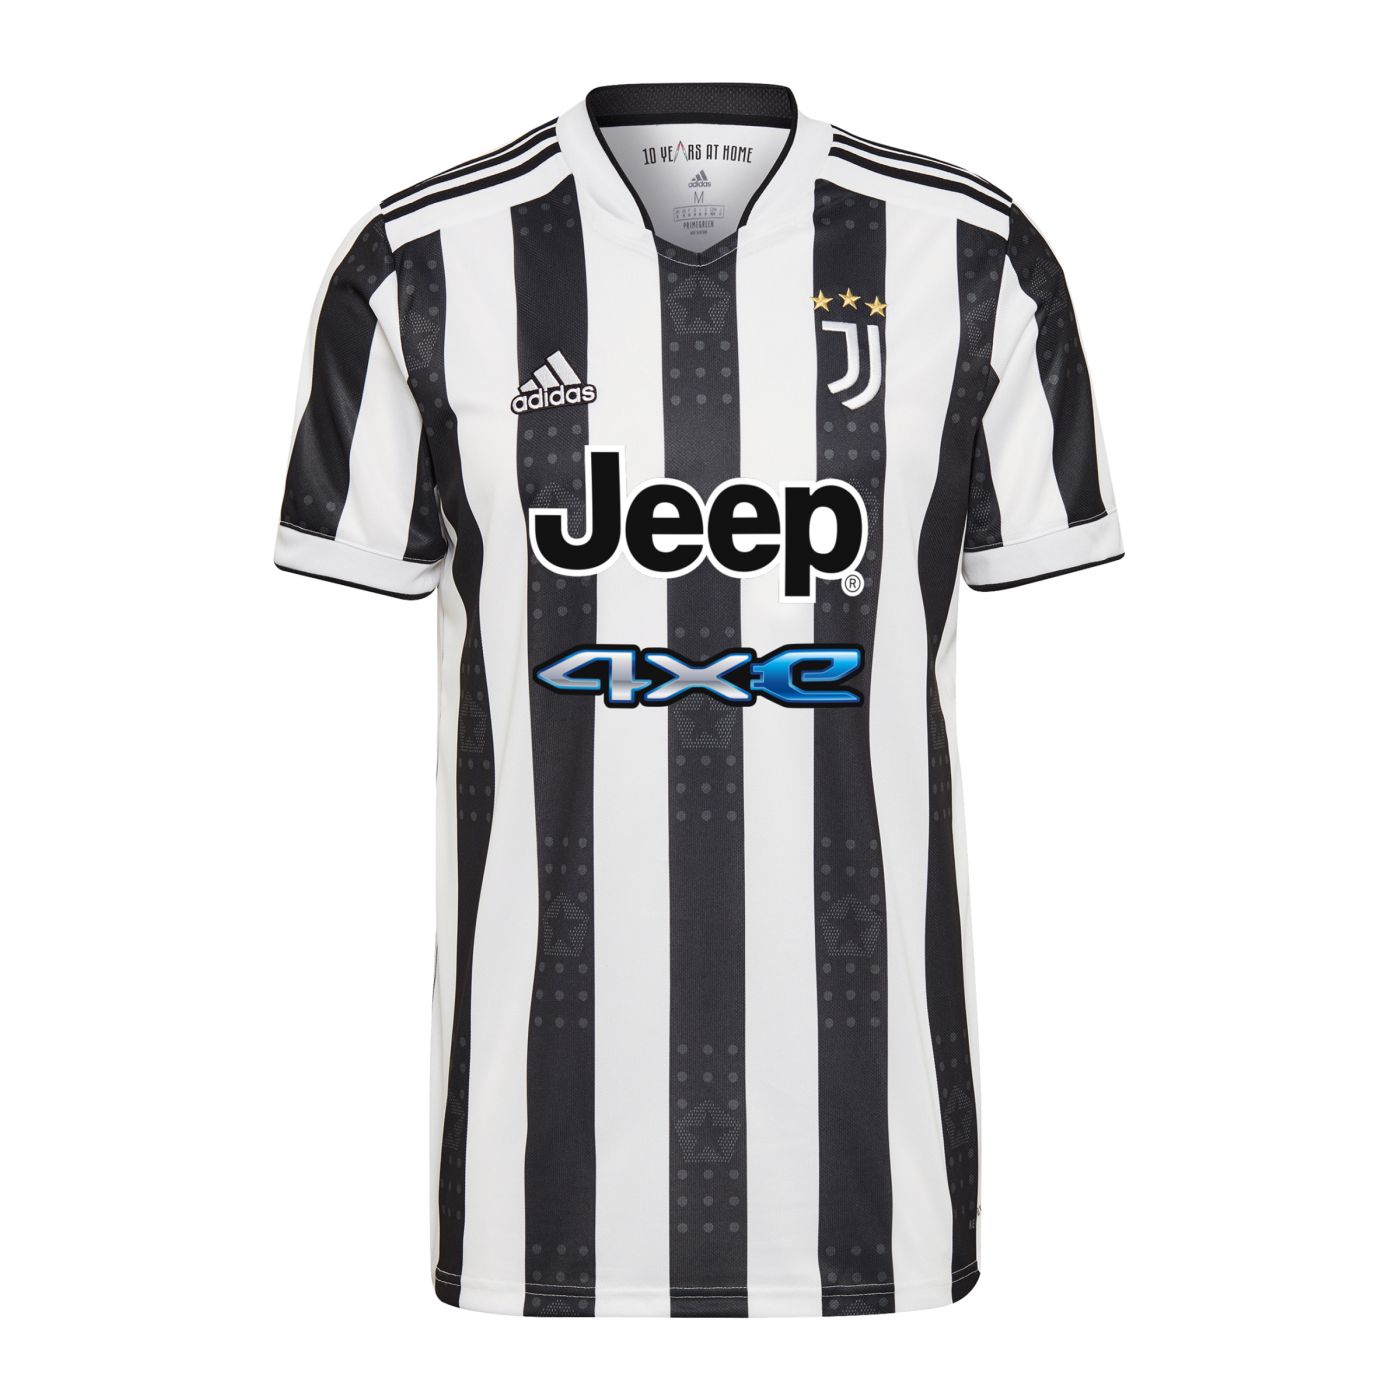 Adidas Juventus Turin Trikot Home 2021 2022 Weiss Jersey Replica